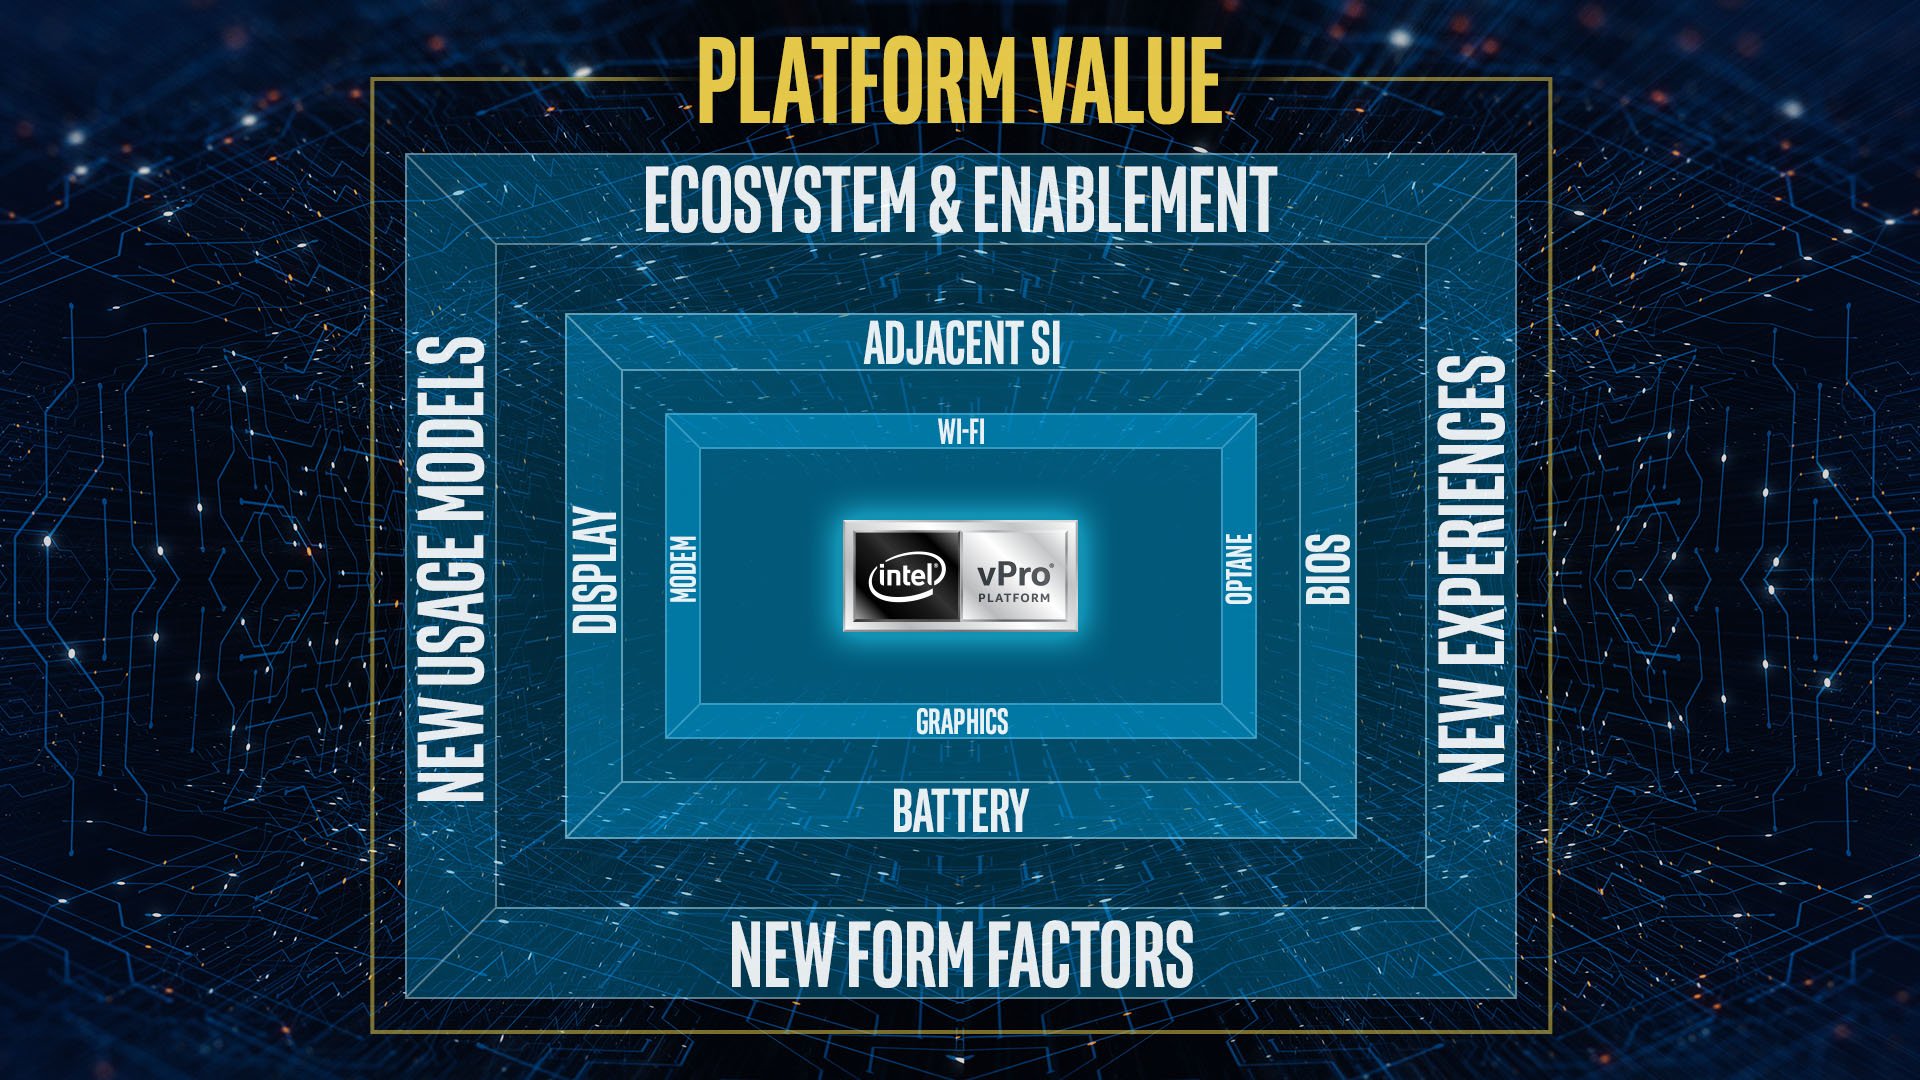 Intel vPro platform